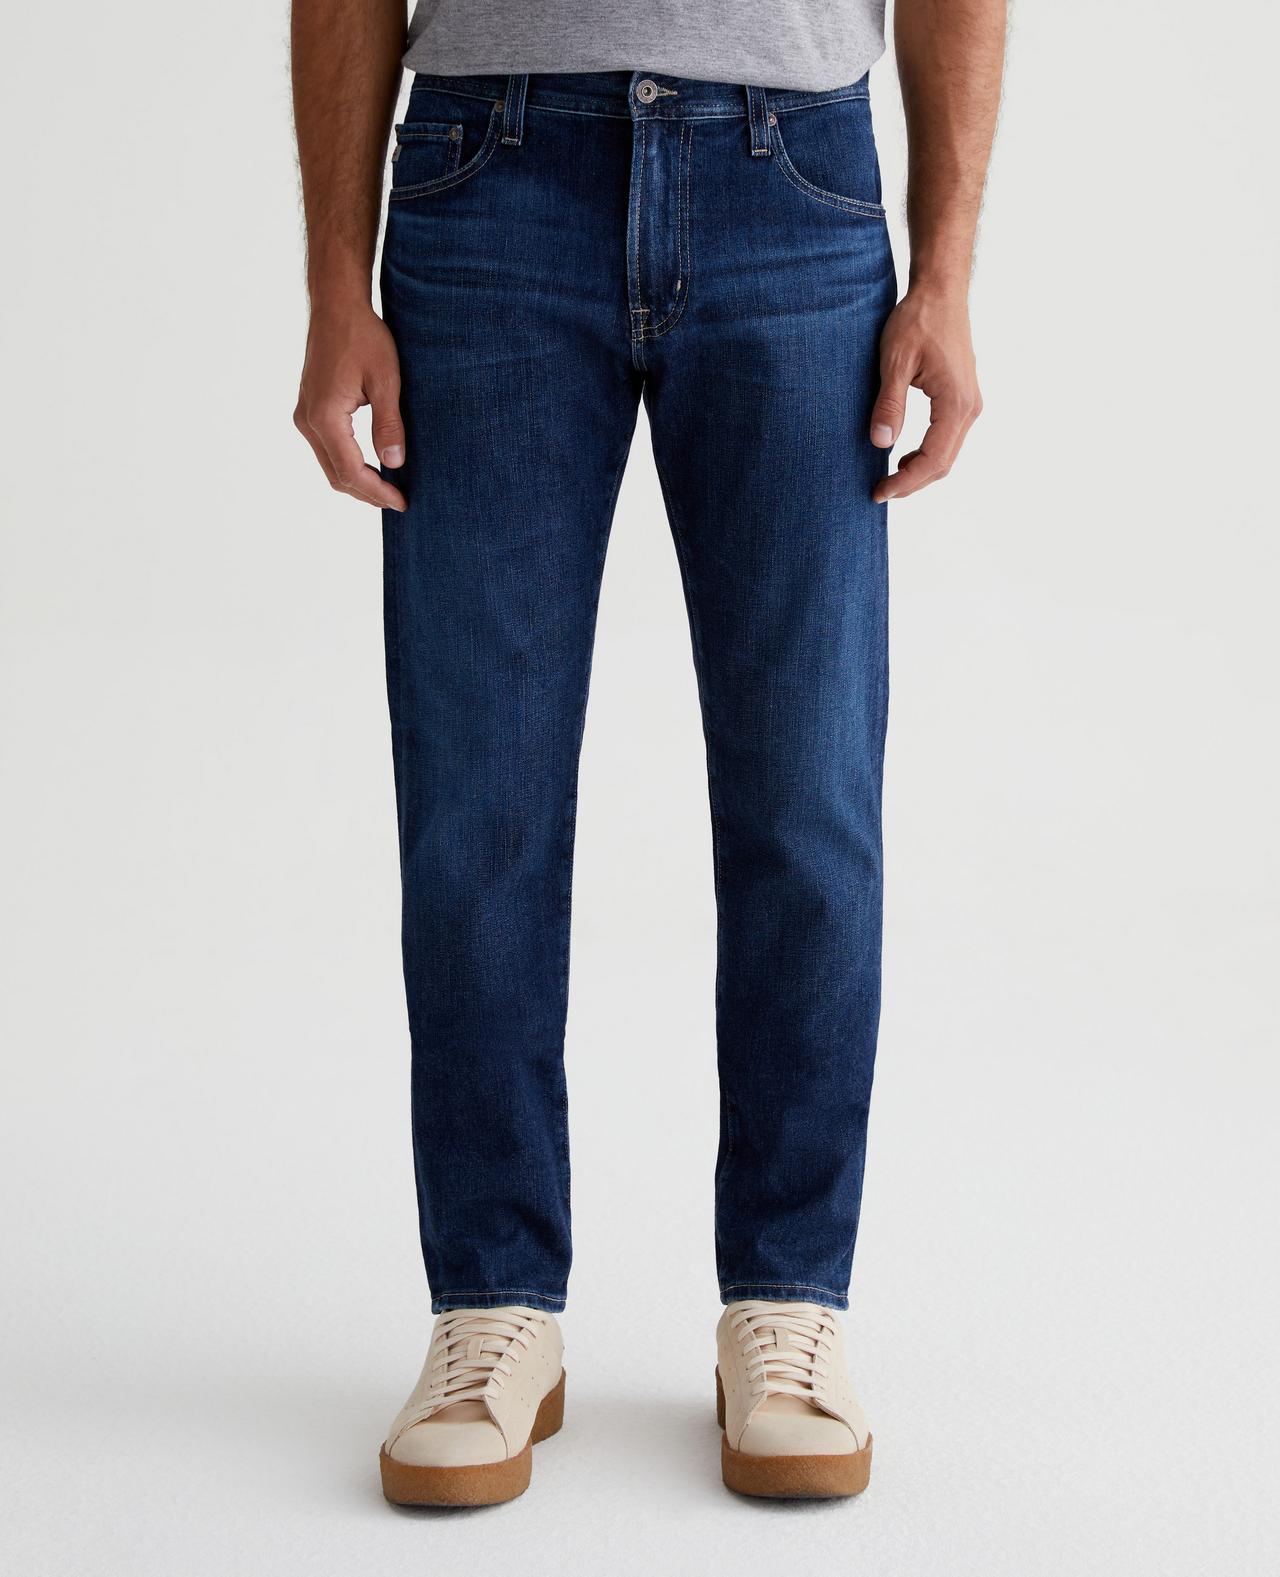 Tellis Modern Slim Jeans - AG Jeans - Danali - 1783FXD-MIDL-29